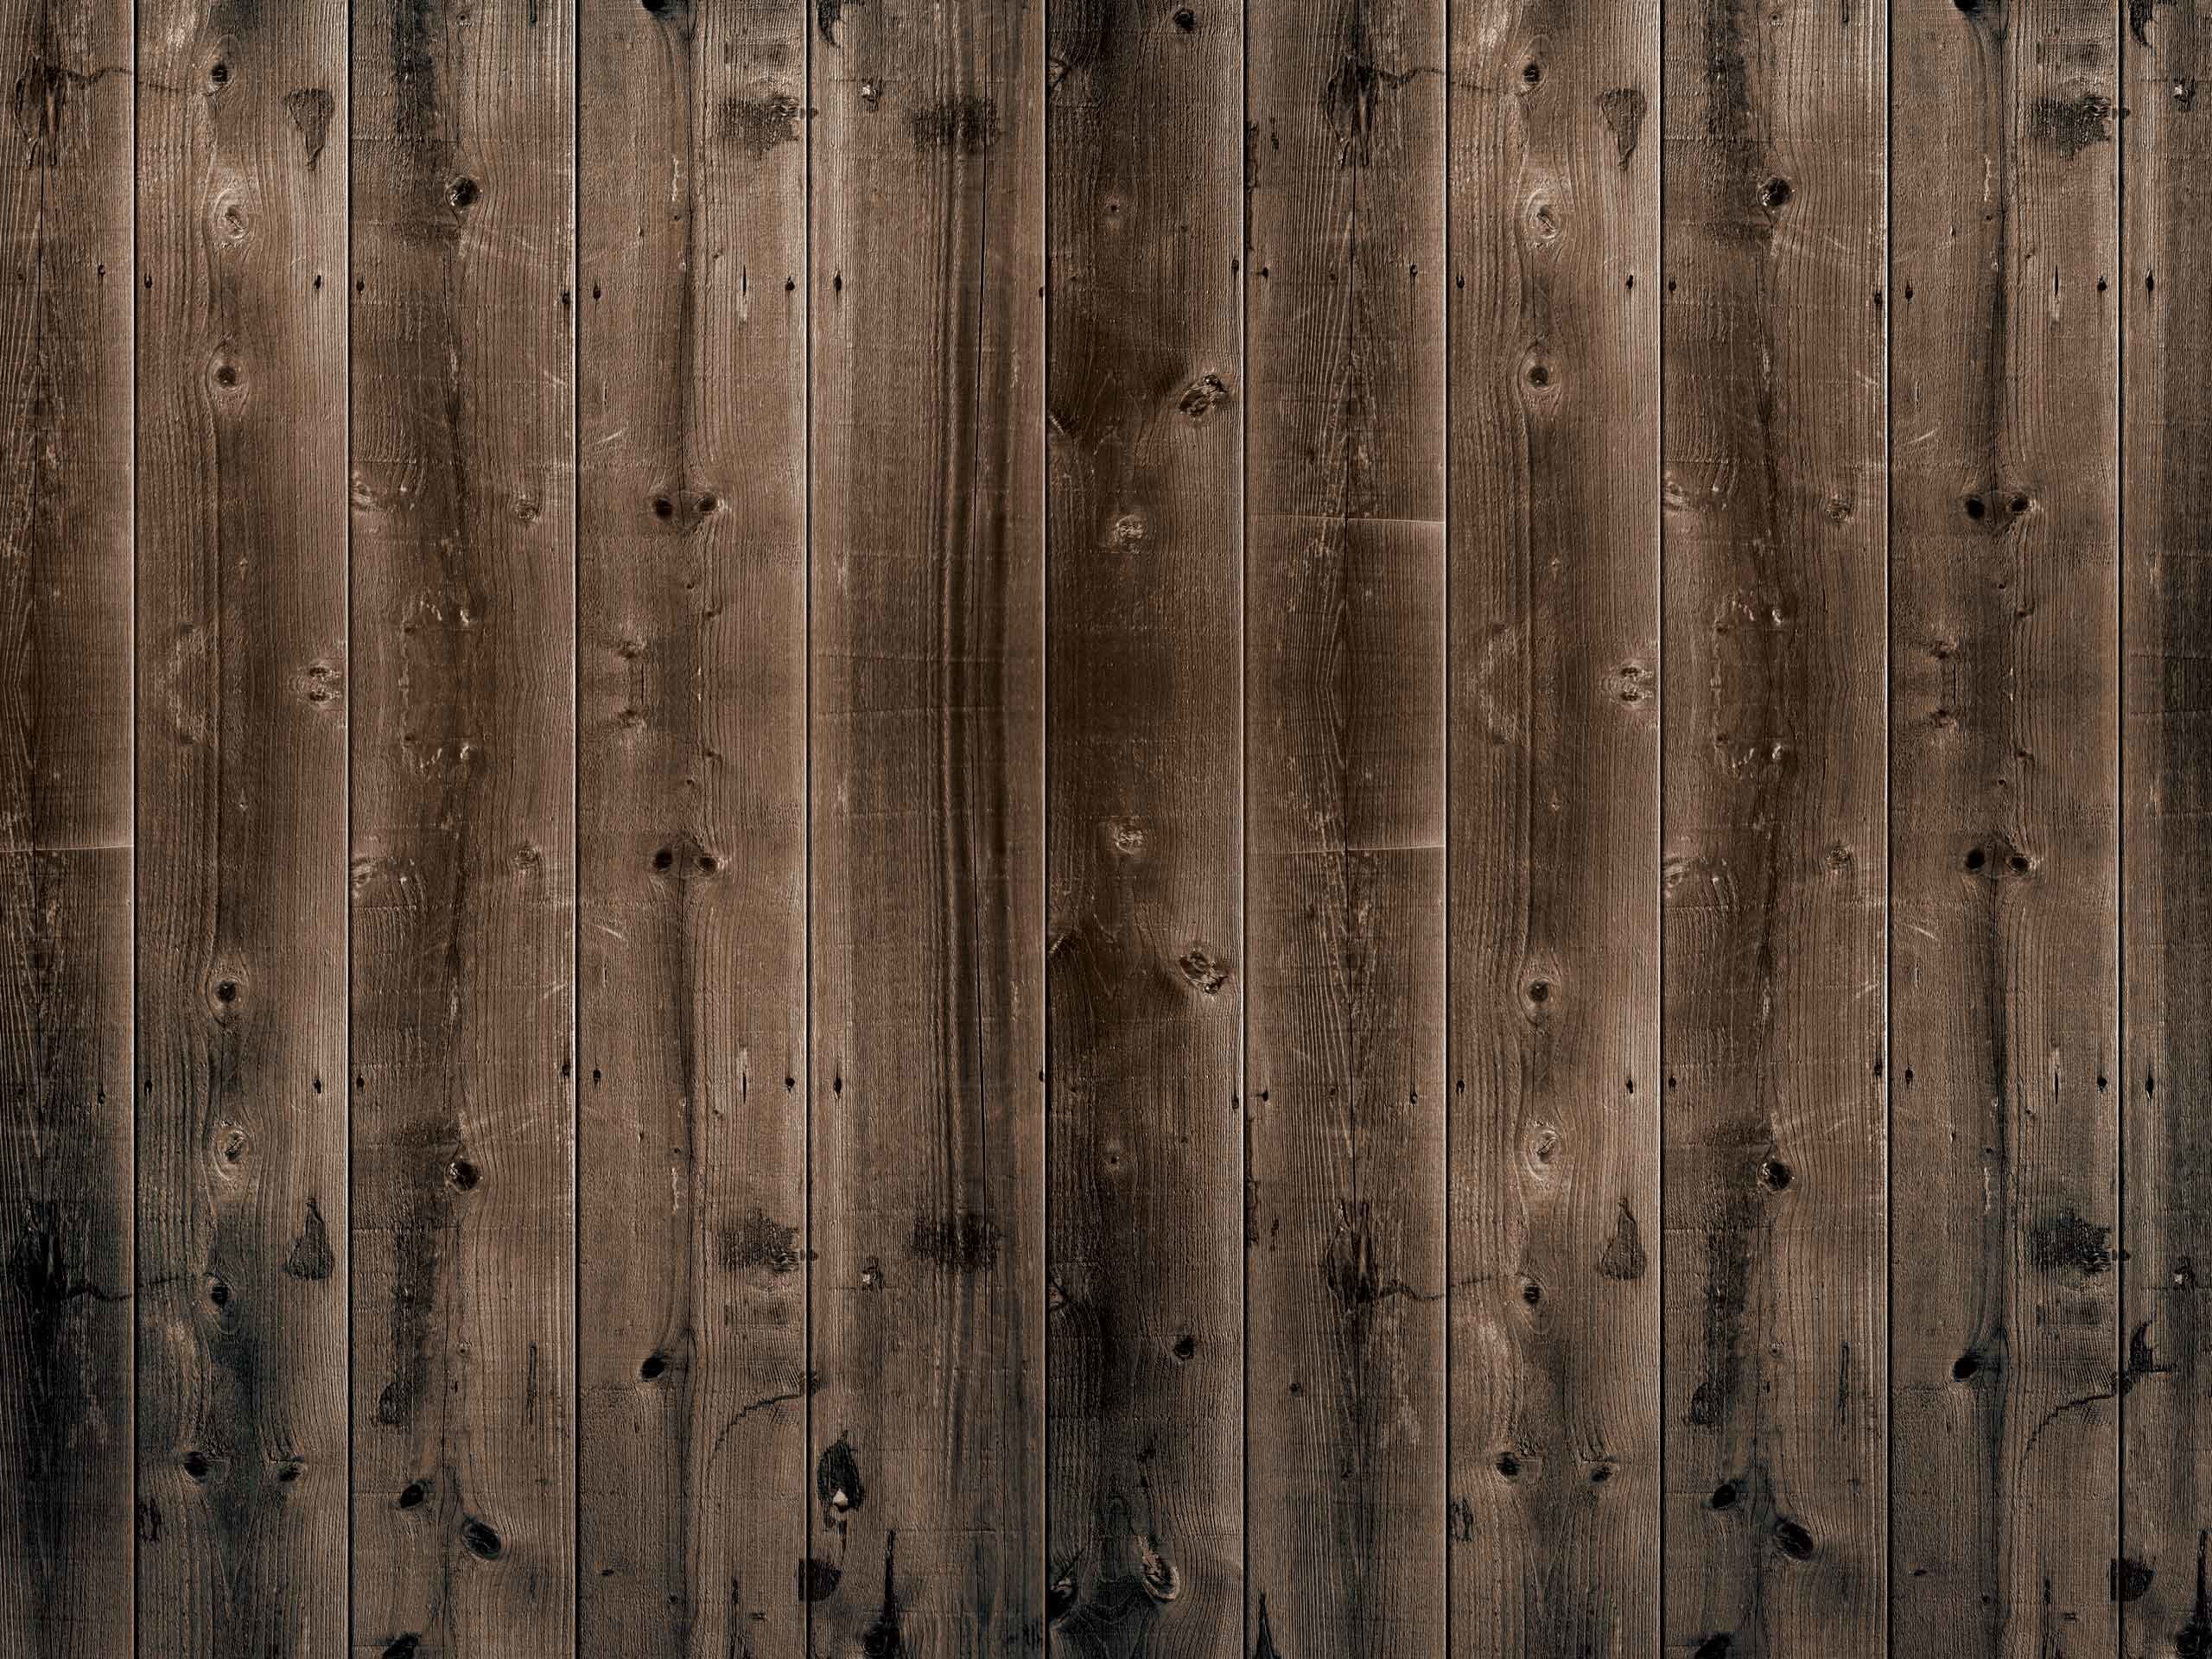 2560x1920 rustic-barn-wood-background-fgvinapv.jpg (2560Ã1920)